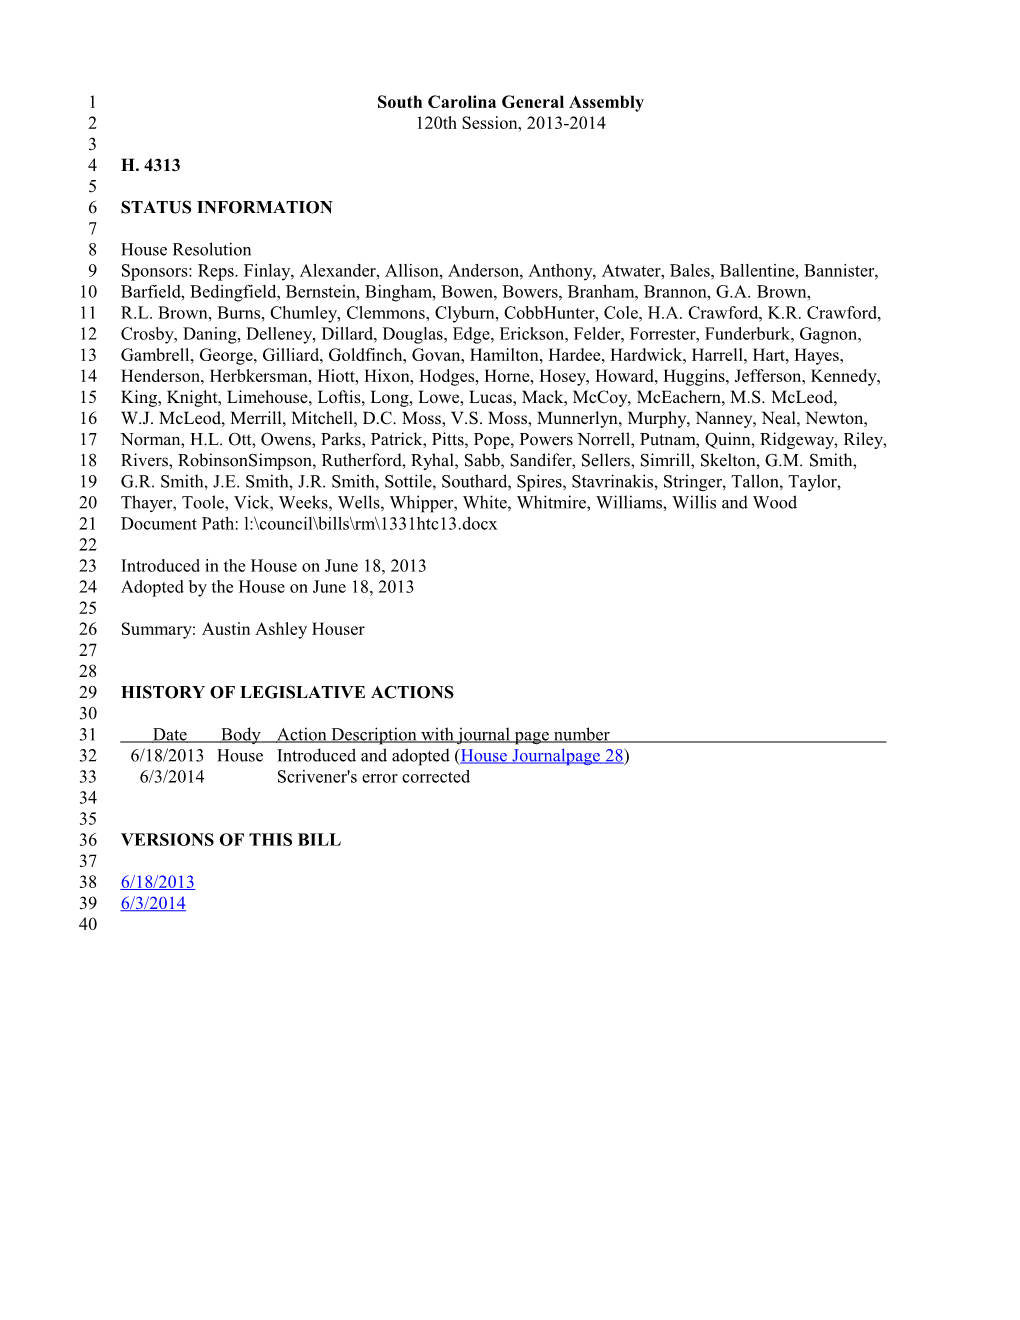 2013-2014 Bill 4313: Austin Ashley Houser - South Carolina Legislature Online